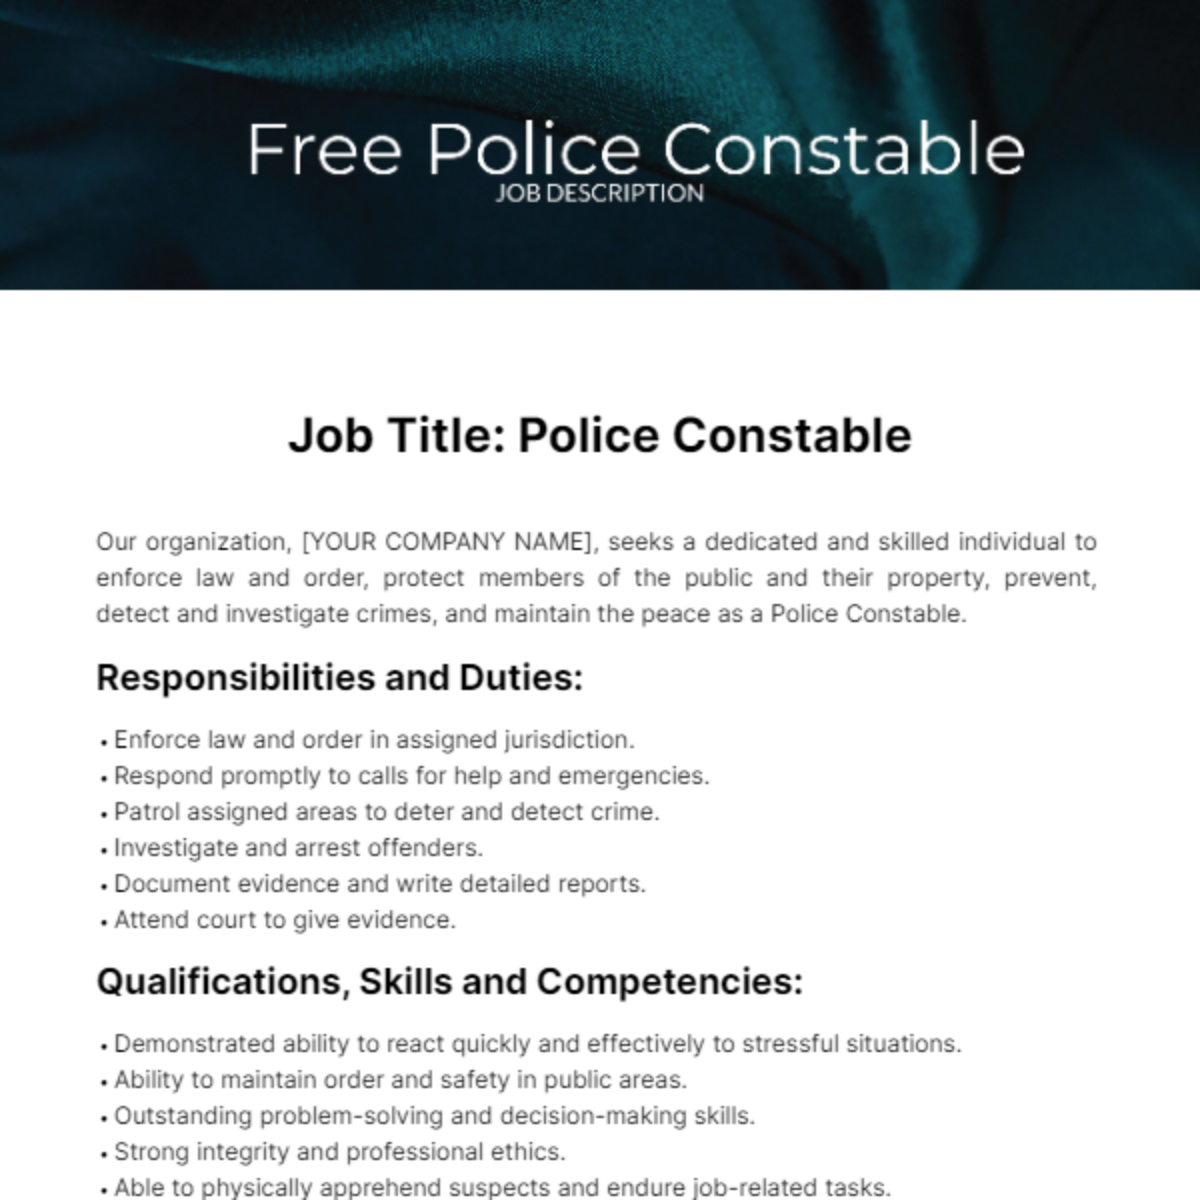 Free Police Constable Job Description Template